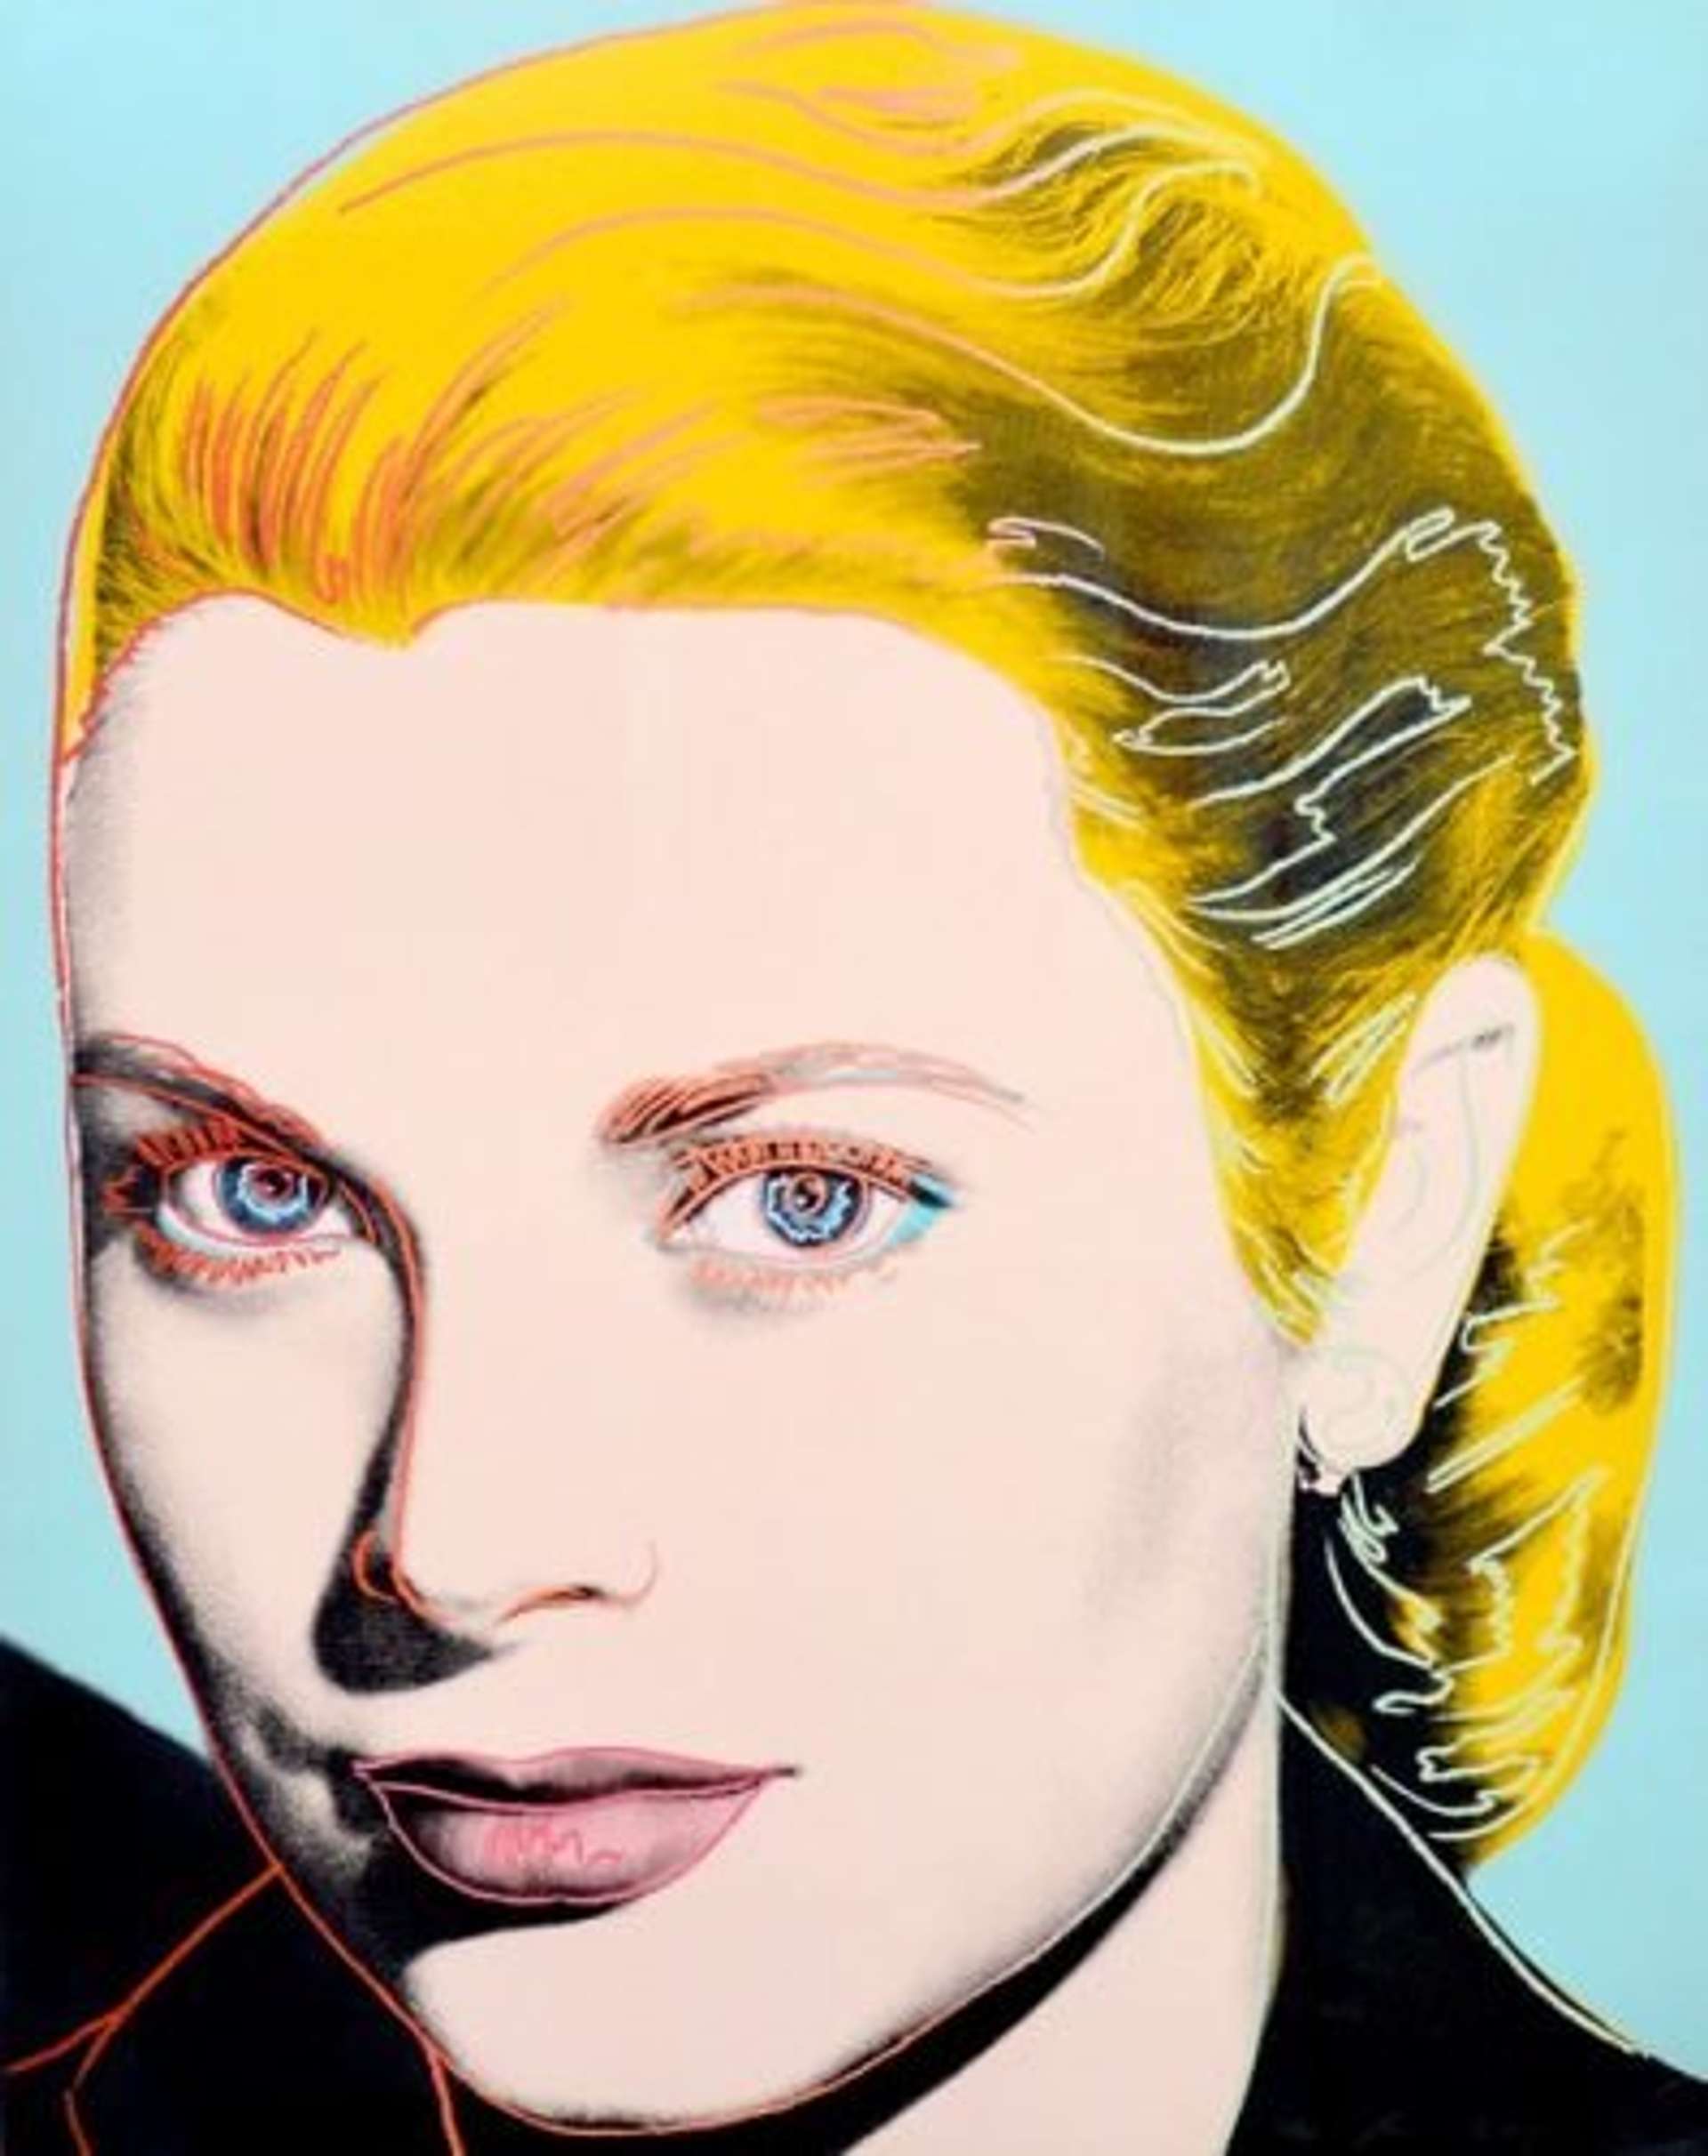 Grace Kelly by Andy Warhol